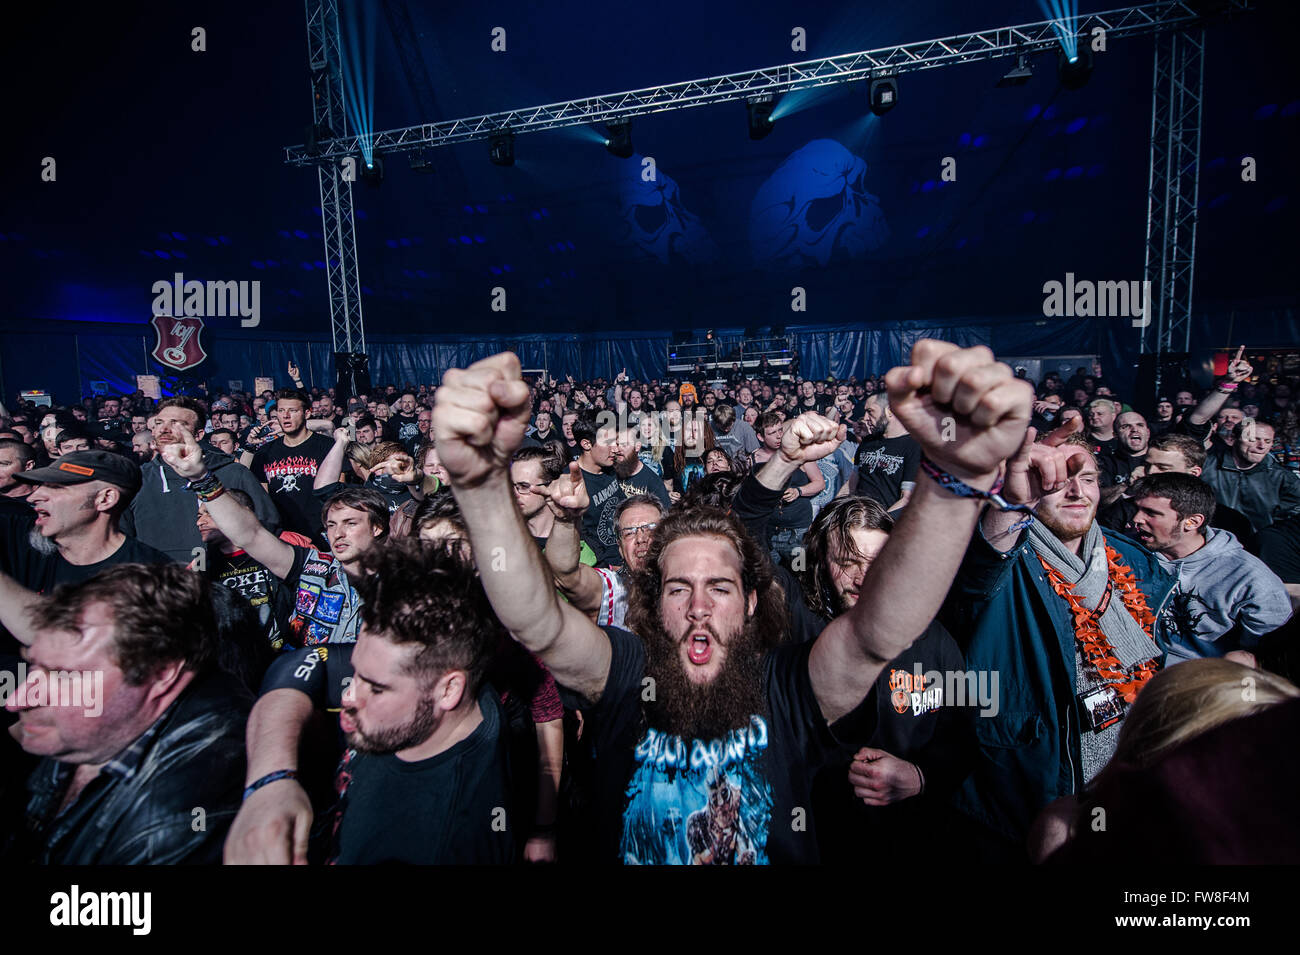 troeplach-austria-01st-apr-2016-metal-fans-cheer-during-a-concert-FW8F4M.jpg